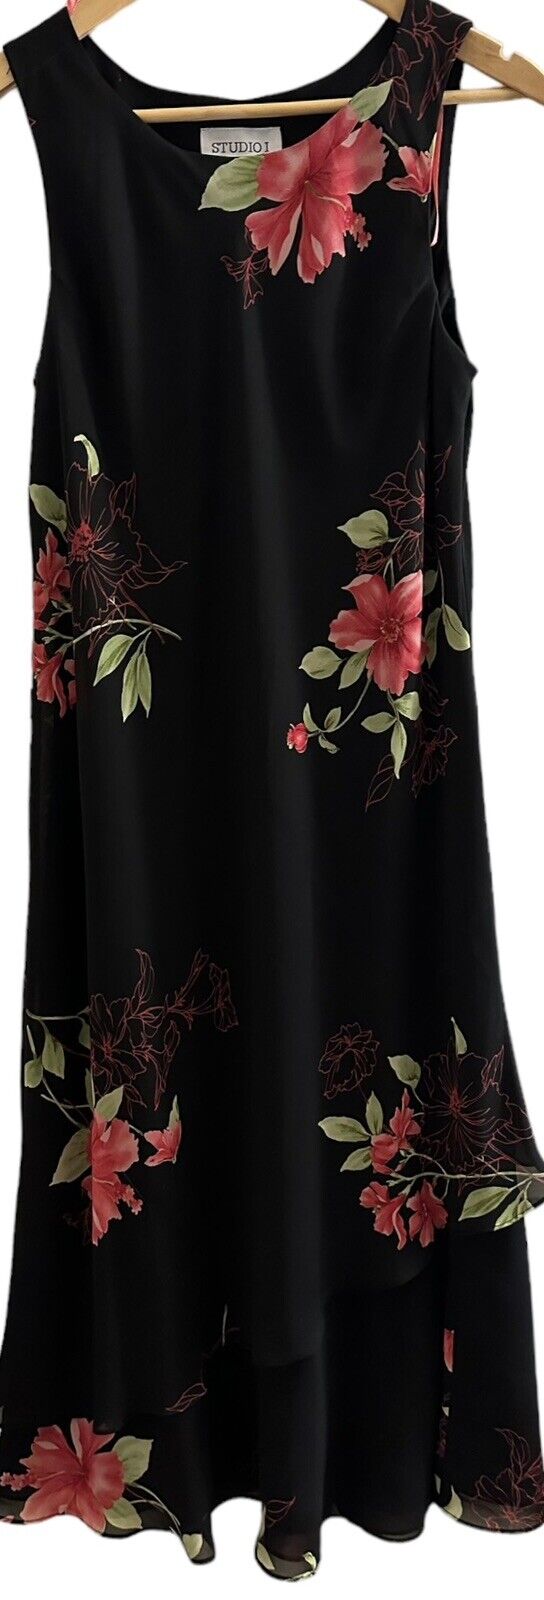 STUDIO 1 Womens Sz 12 Black &Coral Floral Long Sleeveless Dress W/Coral Jacket